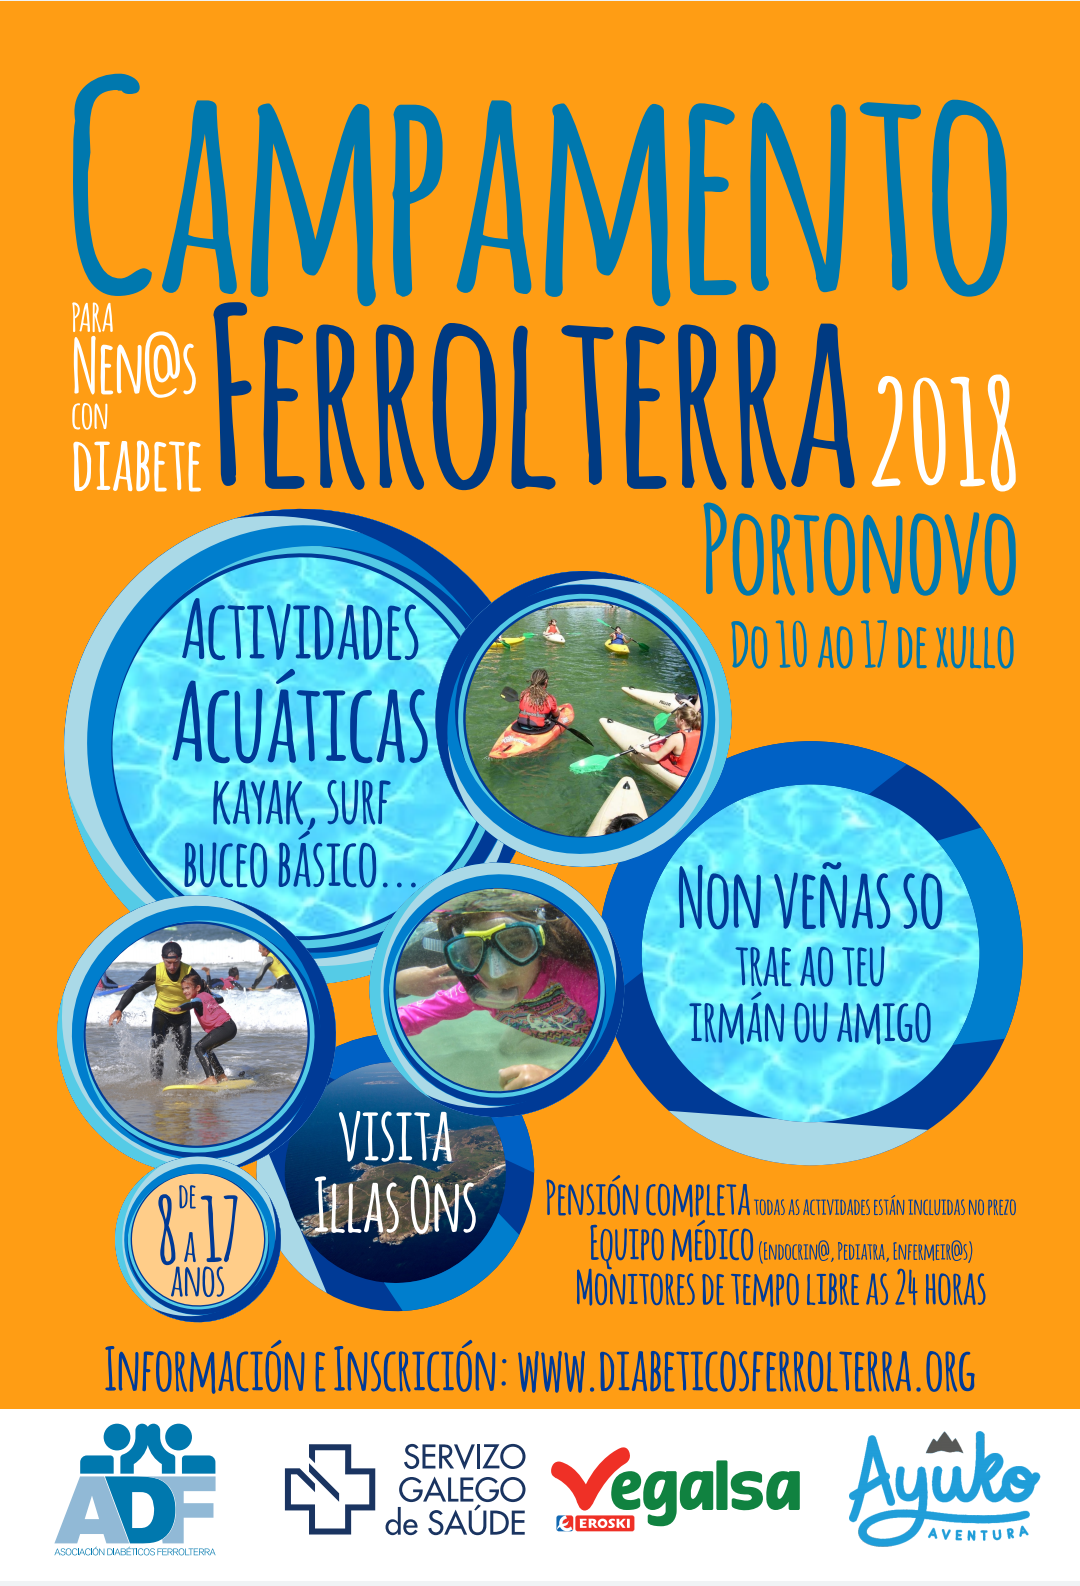 Campamento Ferrolterra 2018